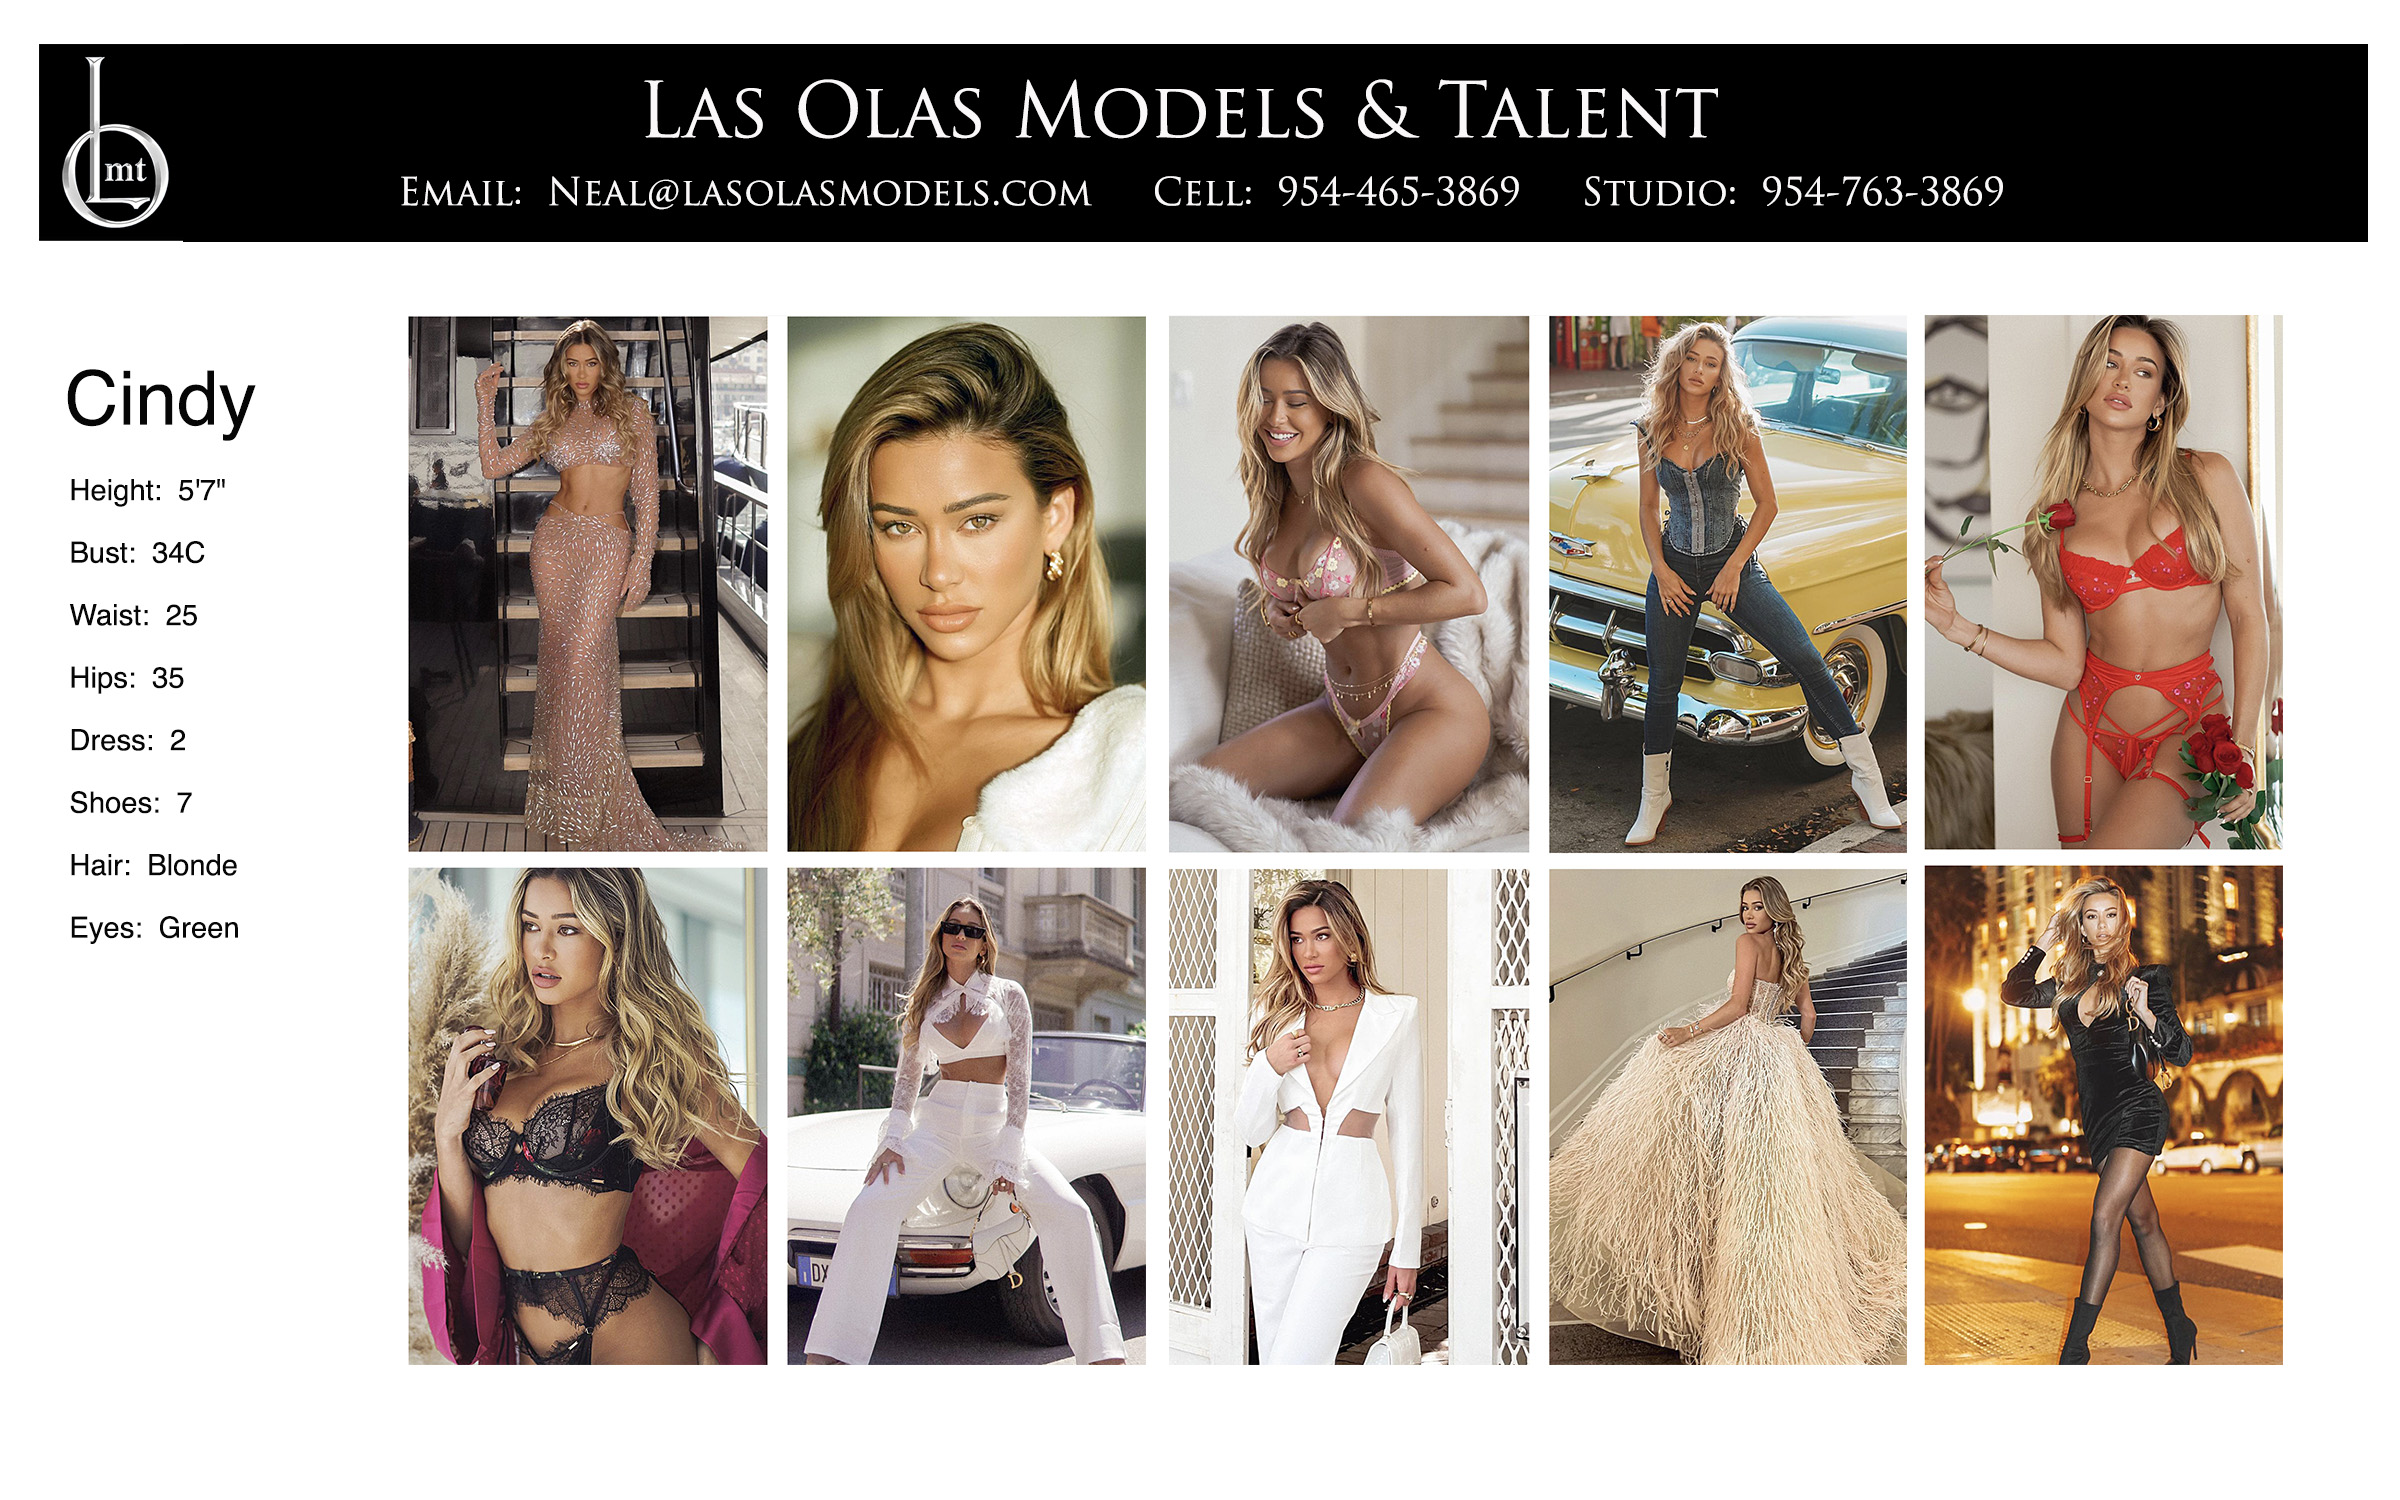 Models Fort Lauderdale Miami South Florida - Print Video Commercial Catalog - Las Olas Models & Talent - Cindy Comp